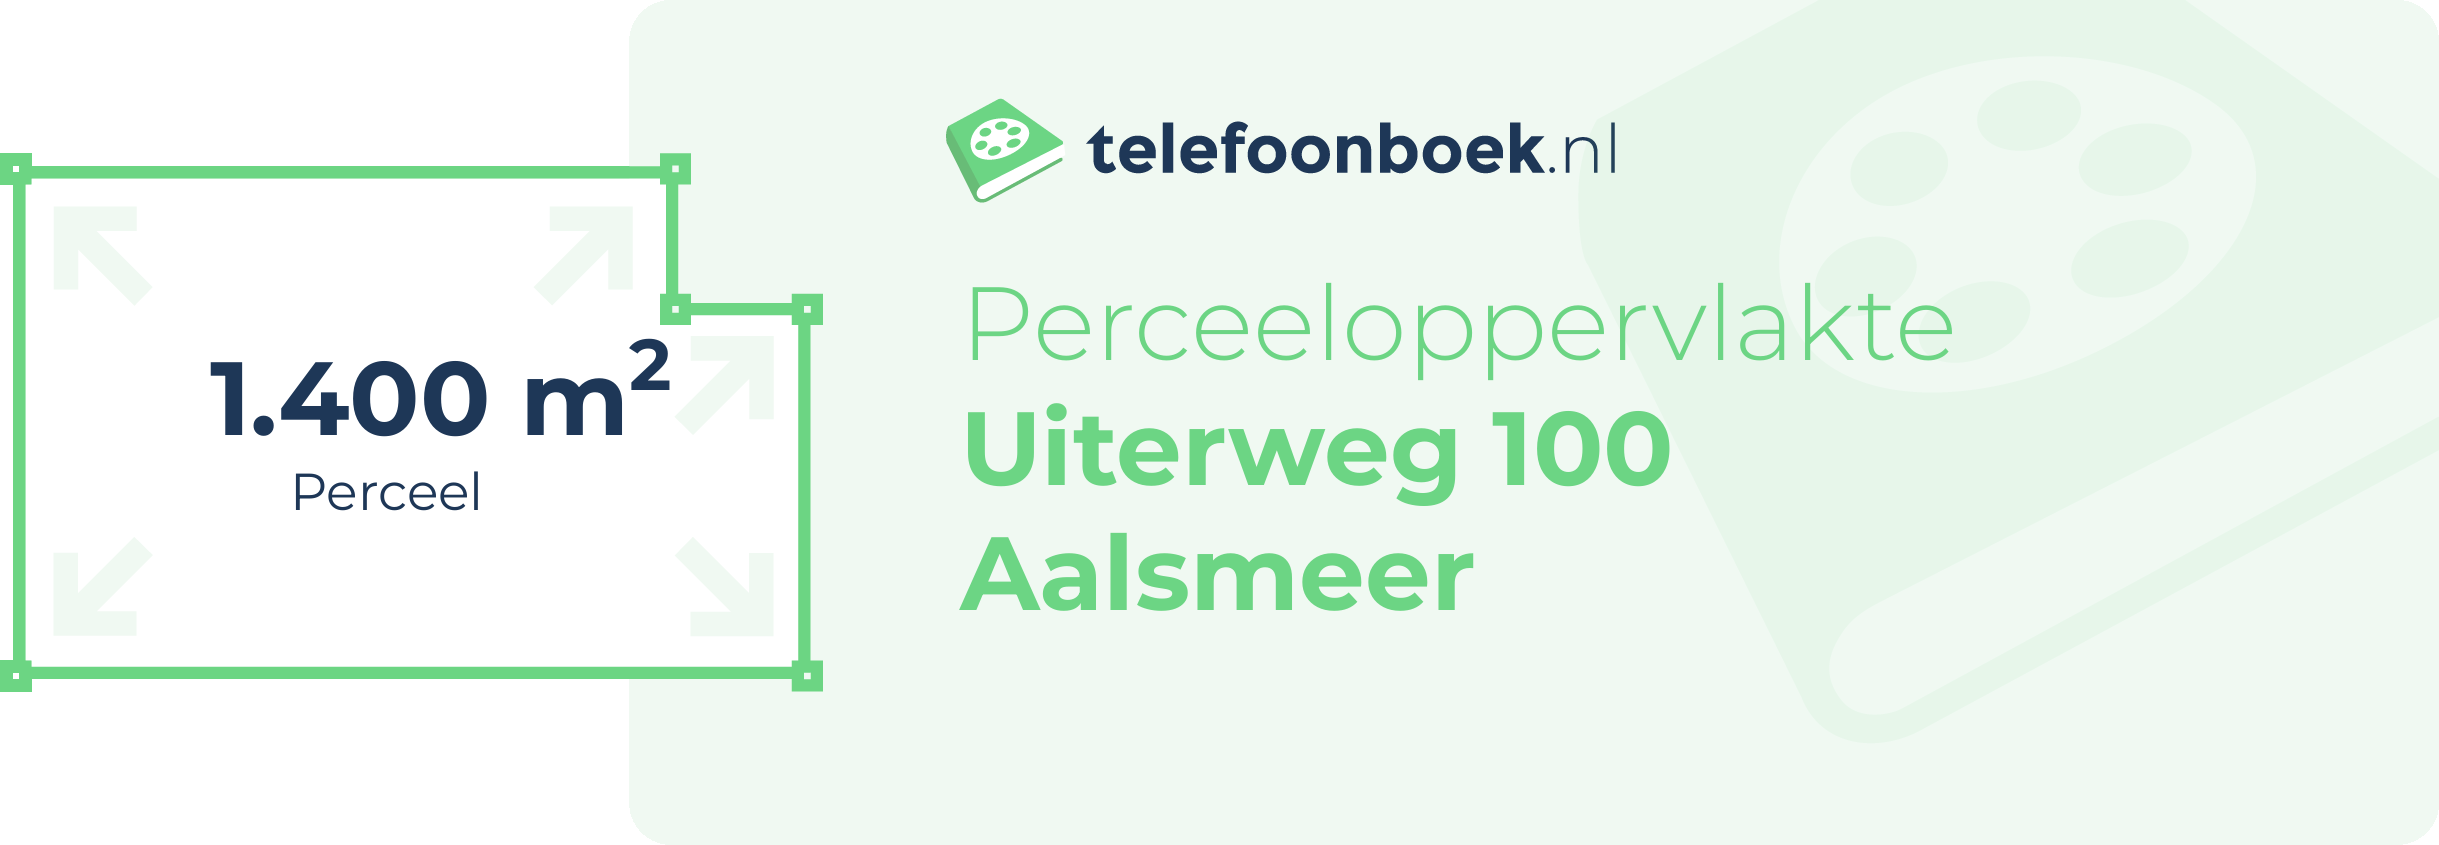 Perceeloppervlakte Uiterweg 100 Aalsmeer